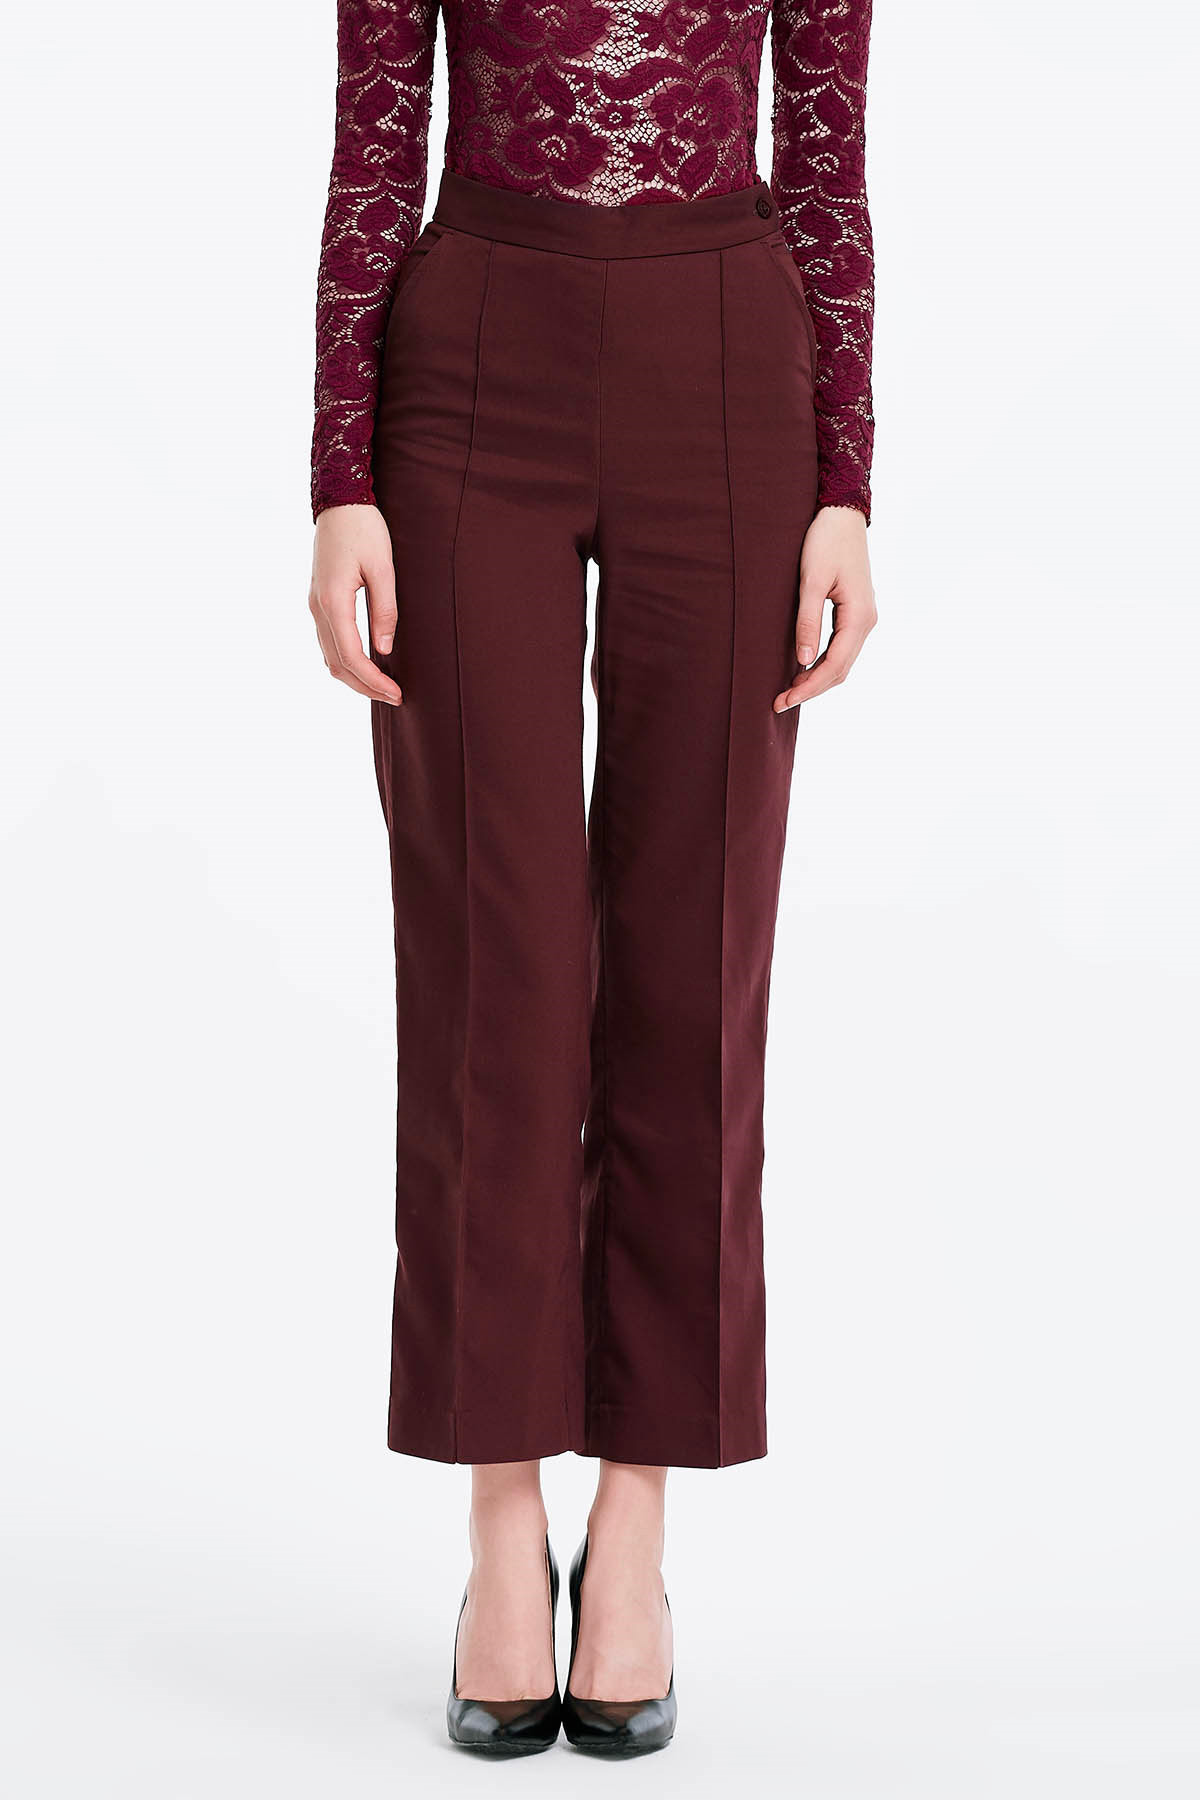 Burgundy trousers , photo 1